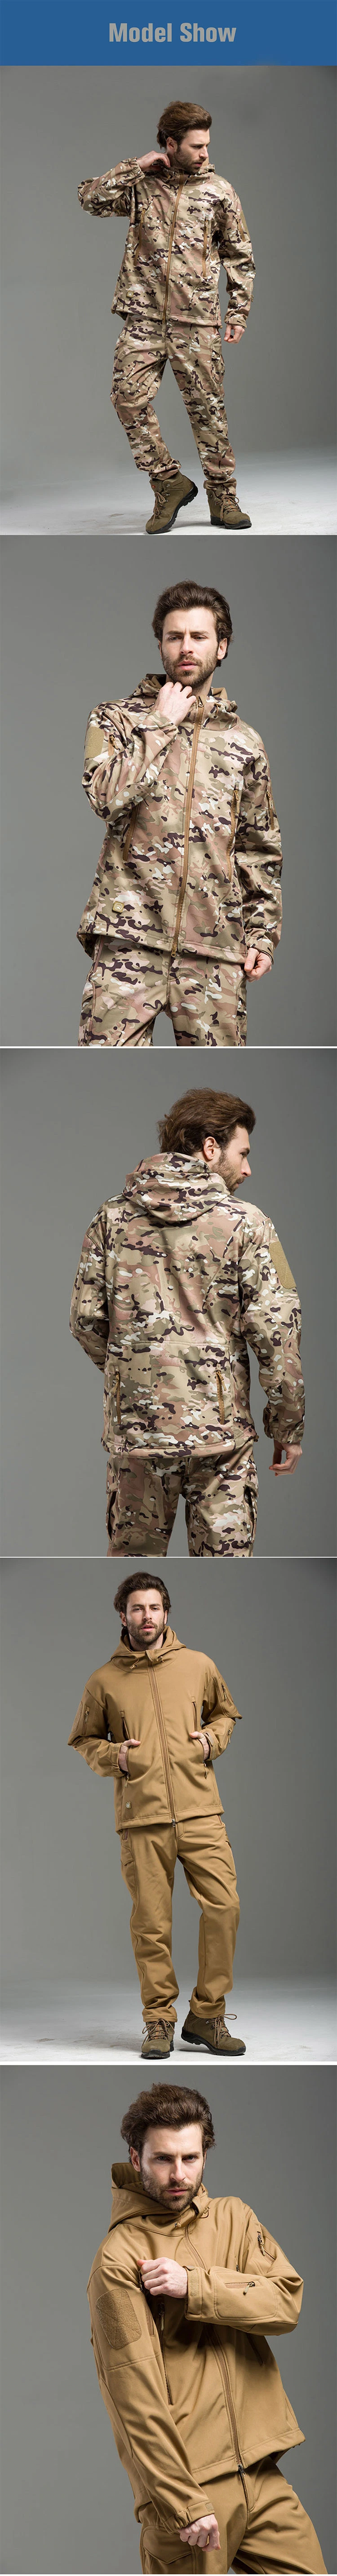 Tactical Windbreaker Outdoor Winter Men Soft Shell Jackets &amp; Coats